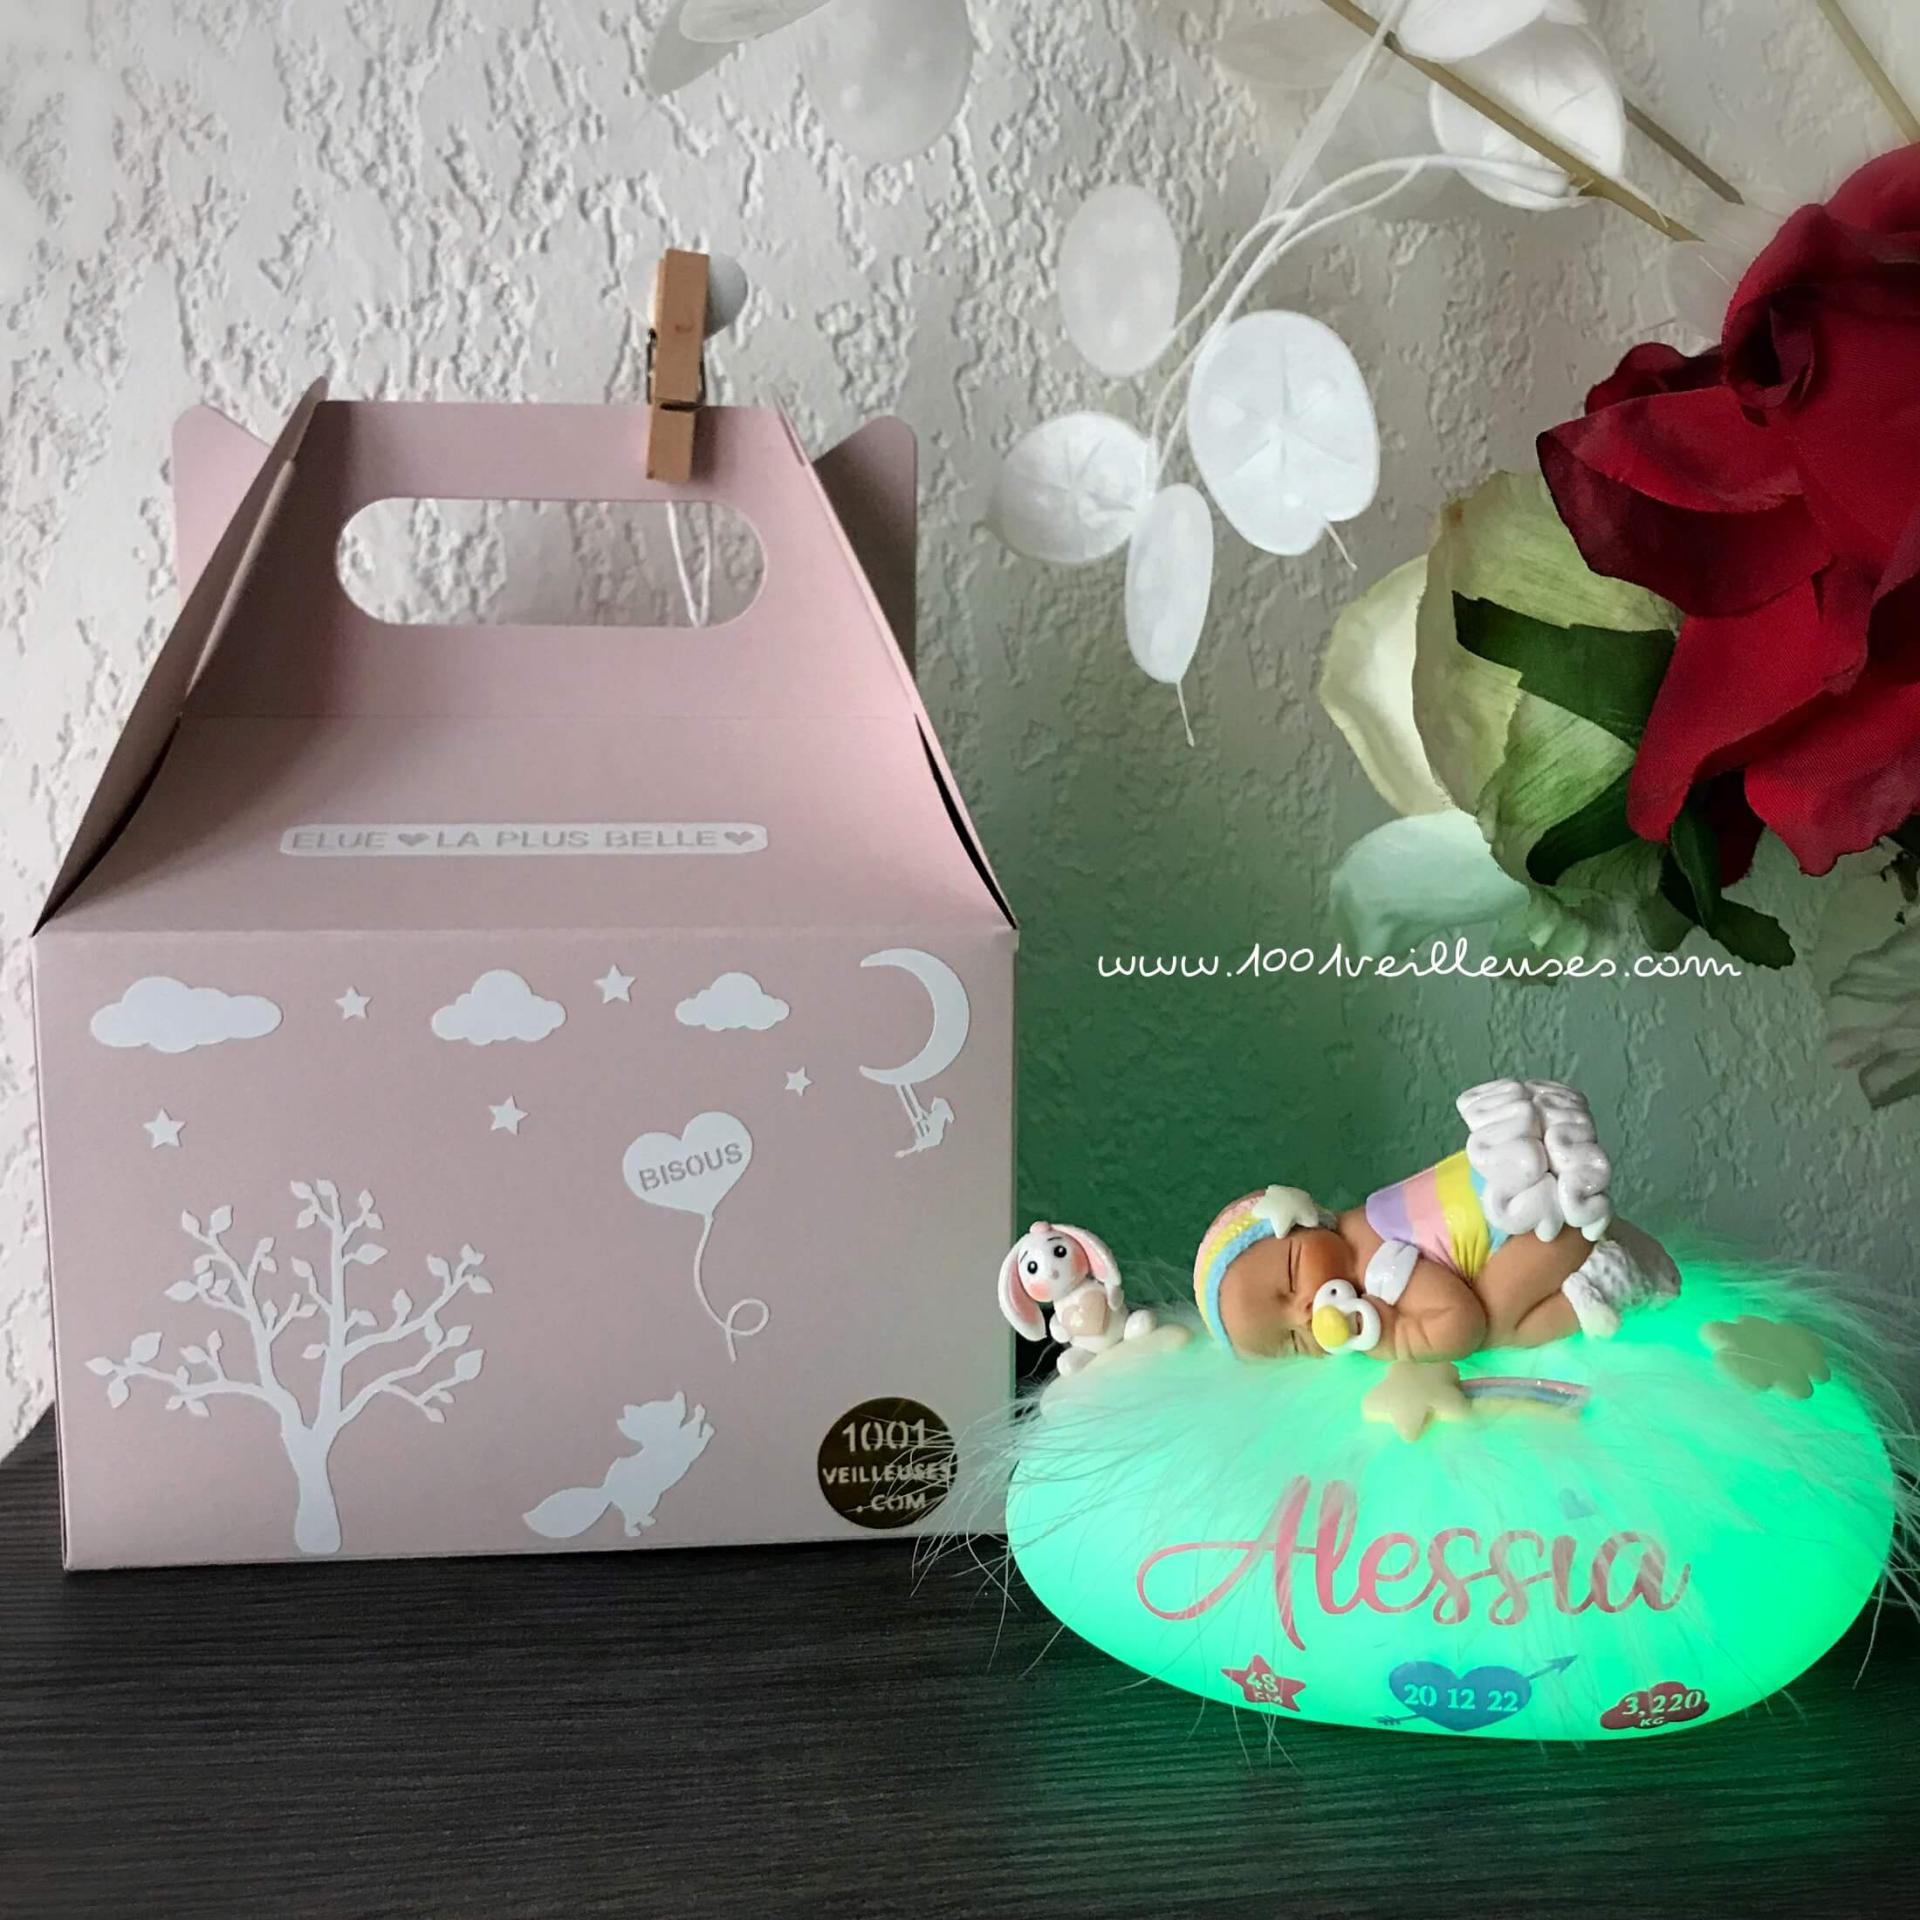 Rare handmade newborn gift set - Multicolored plush for a girl - Personalized nightlight and gift box